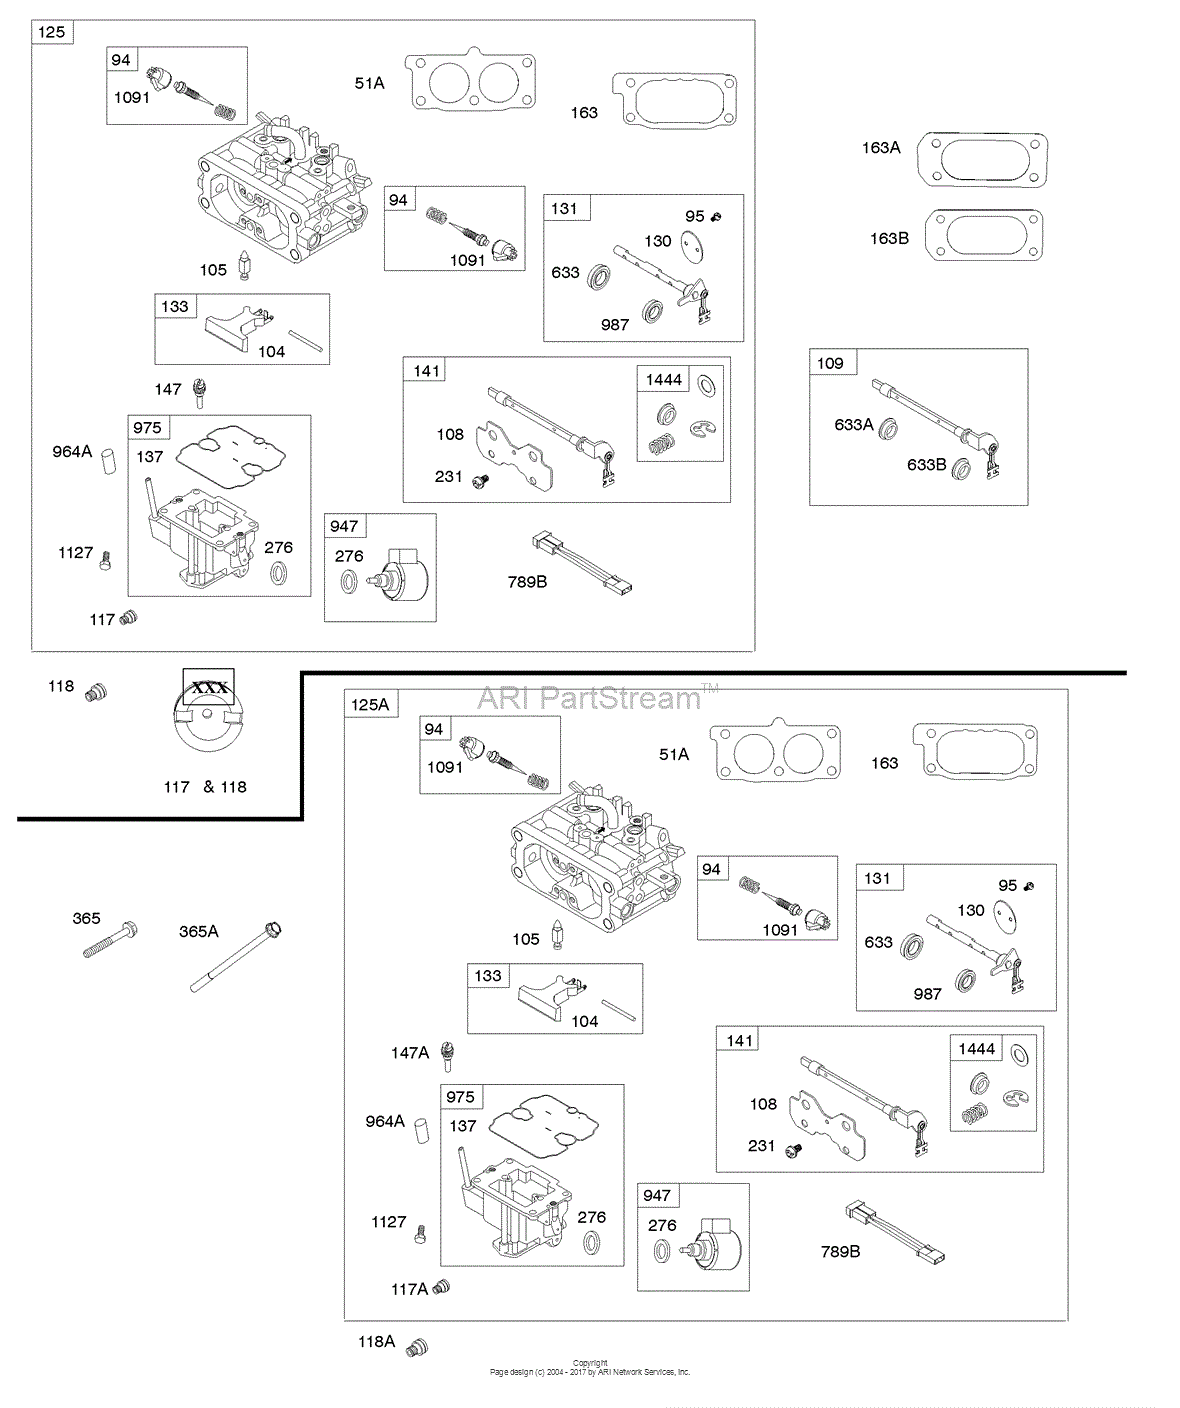 briggs and stratton fuel solenoid wiring diagram 402707